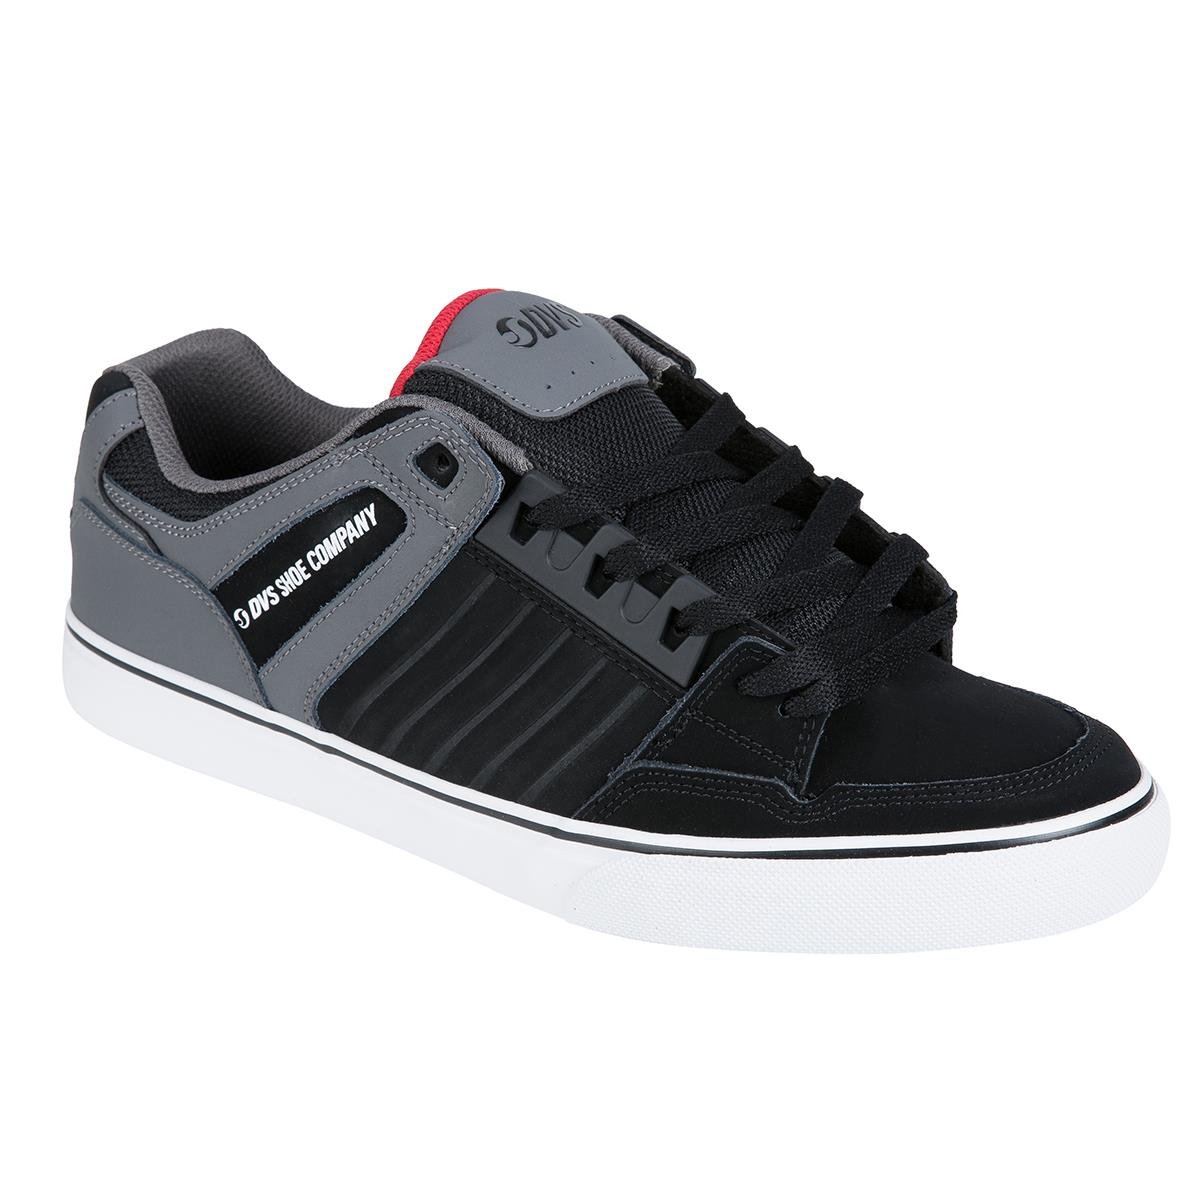 DVS Shoes Celsius CT Black/Charcoal/Red Nubuk | Maciag Offroad